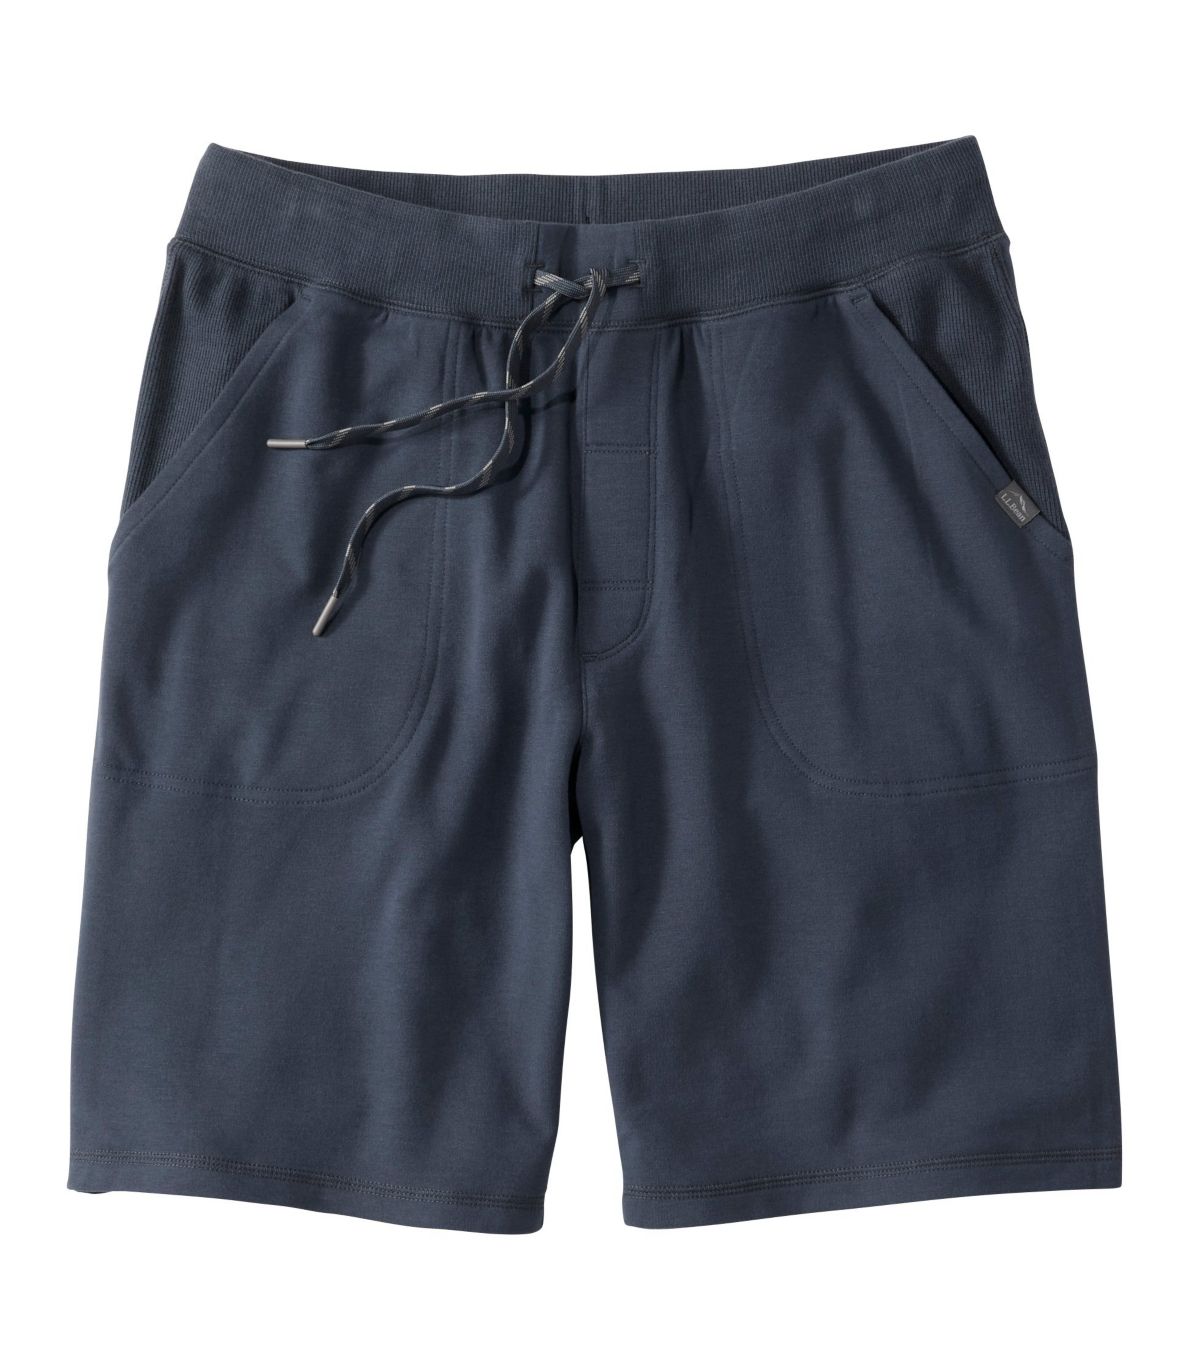 Men's Bean's Comfort Camp Knit Shorts